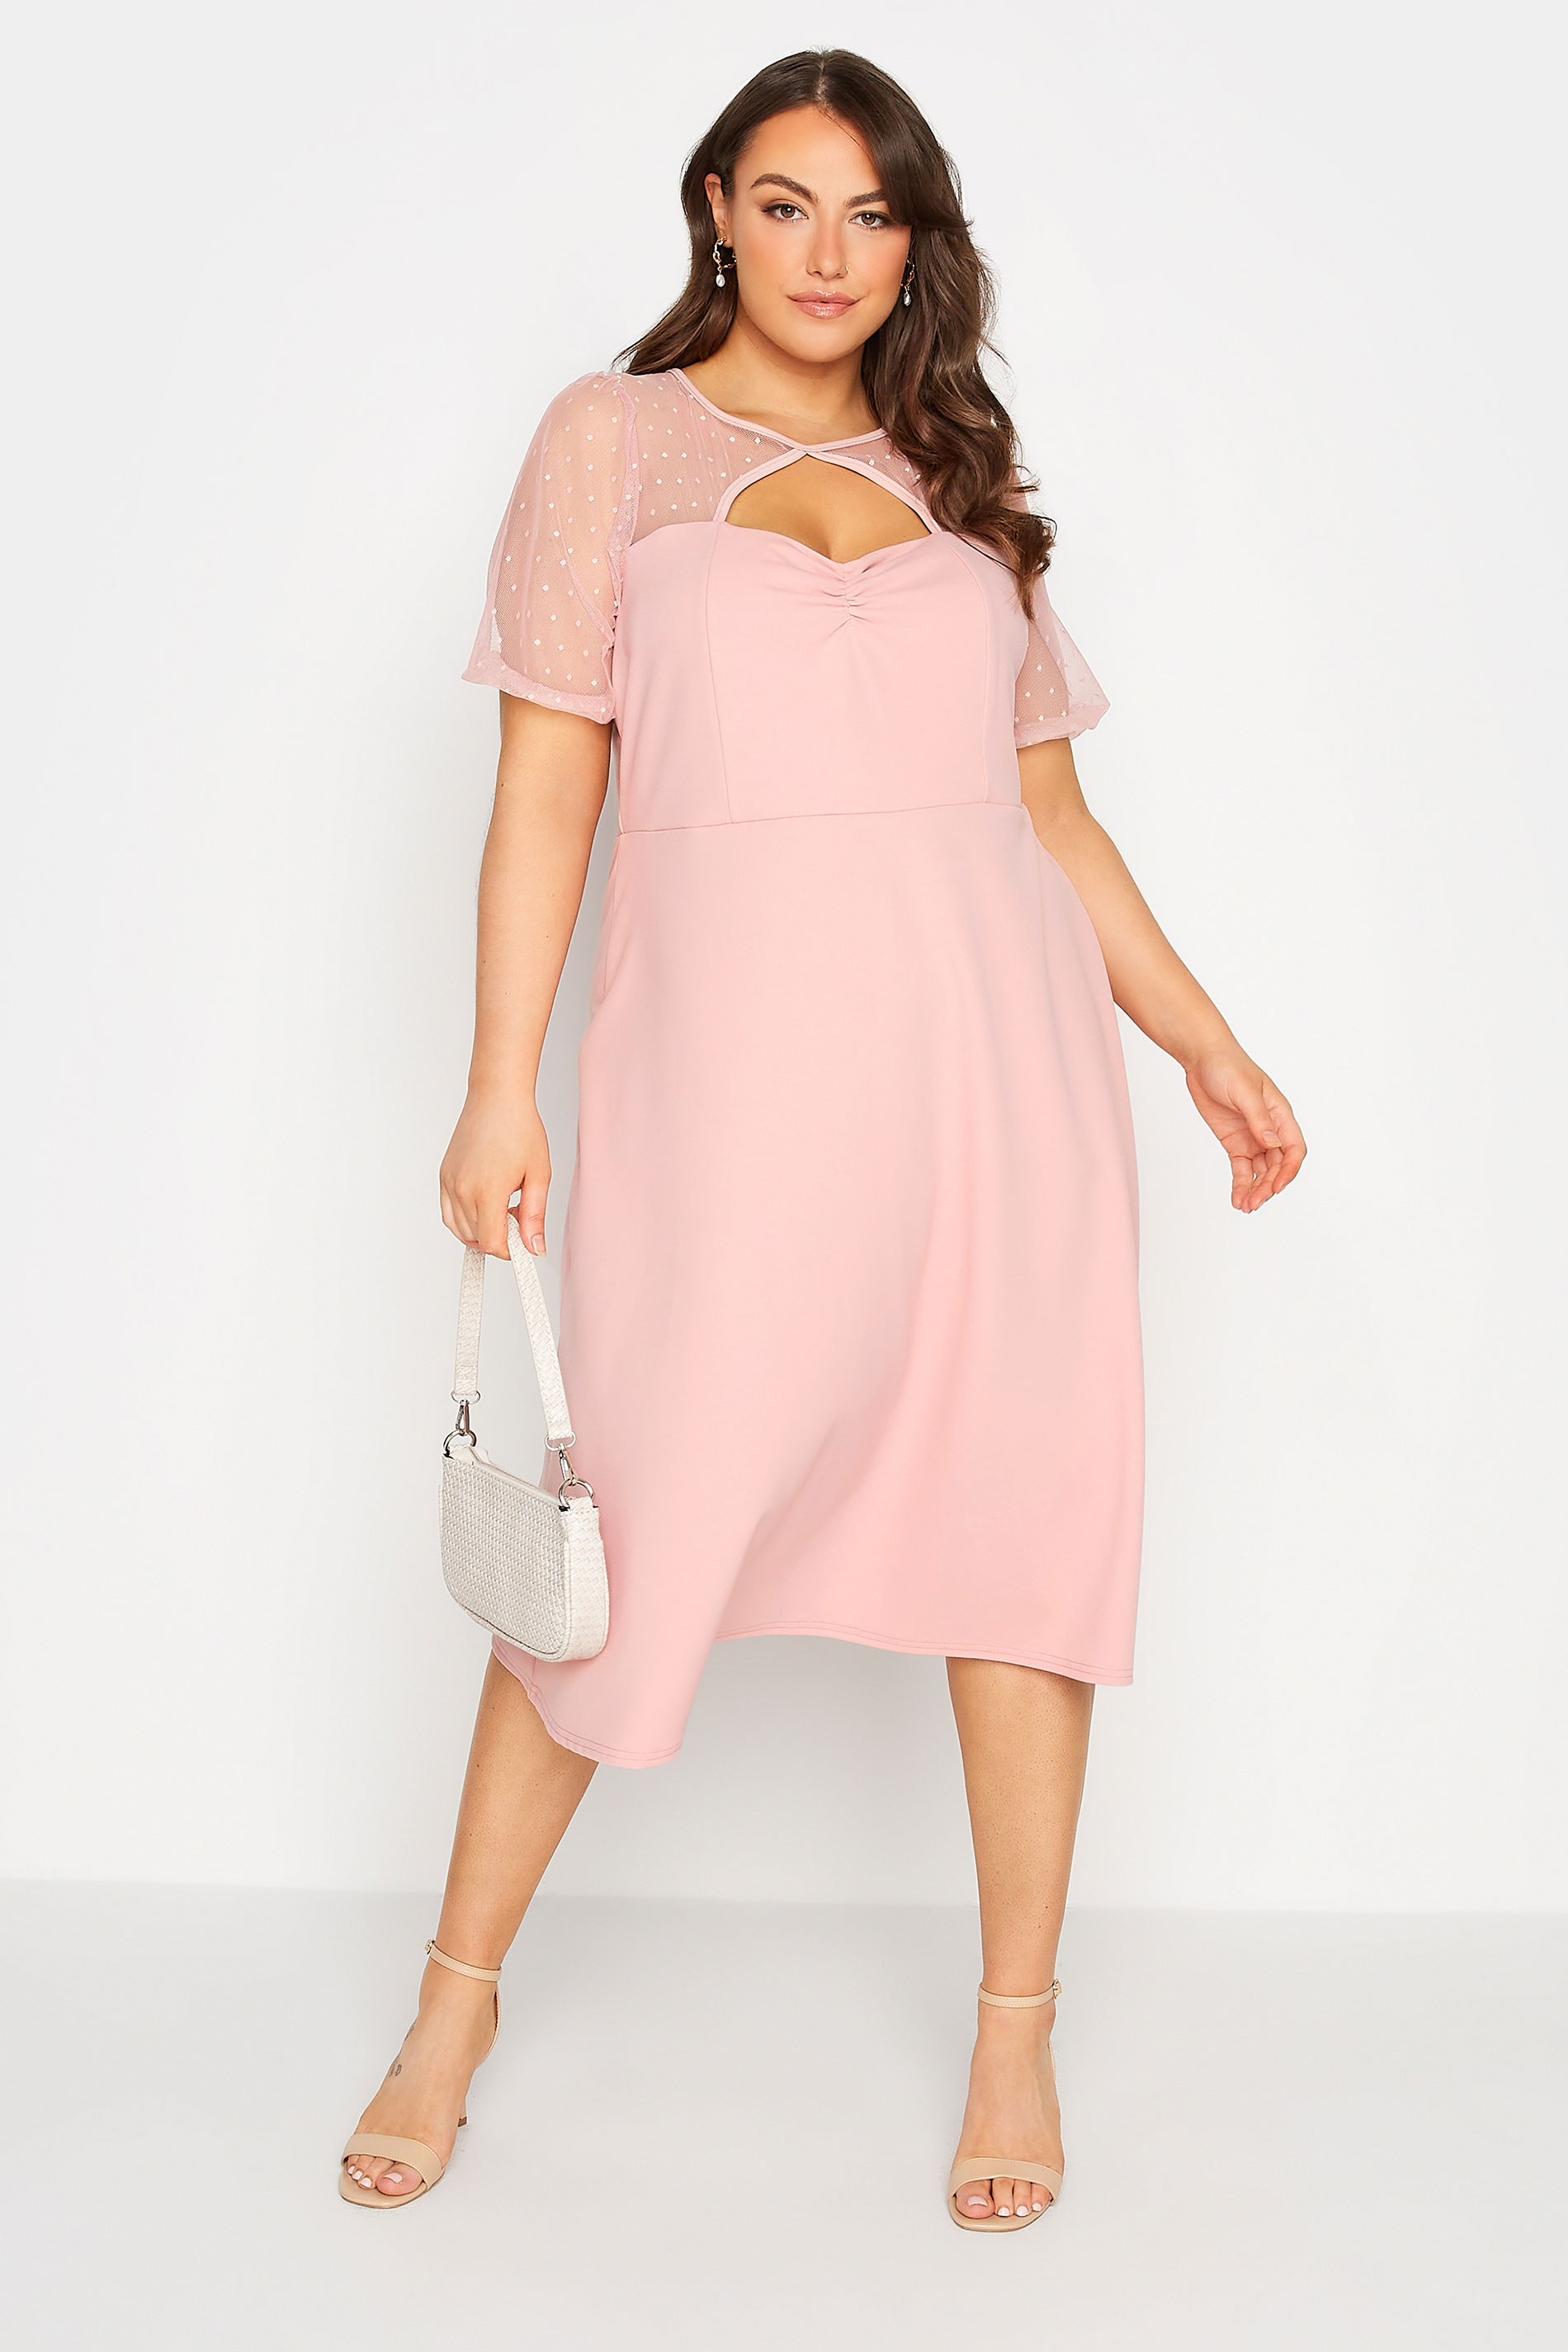 YOURS LONDON Plus Size Pink Polka Dot Mesh Midi Skater Dress | Yours Clothing 1